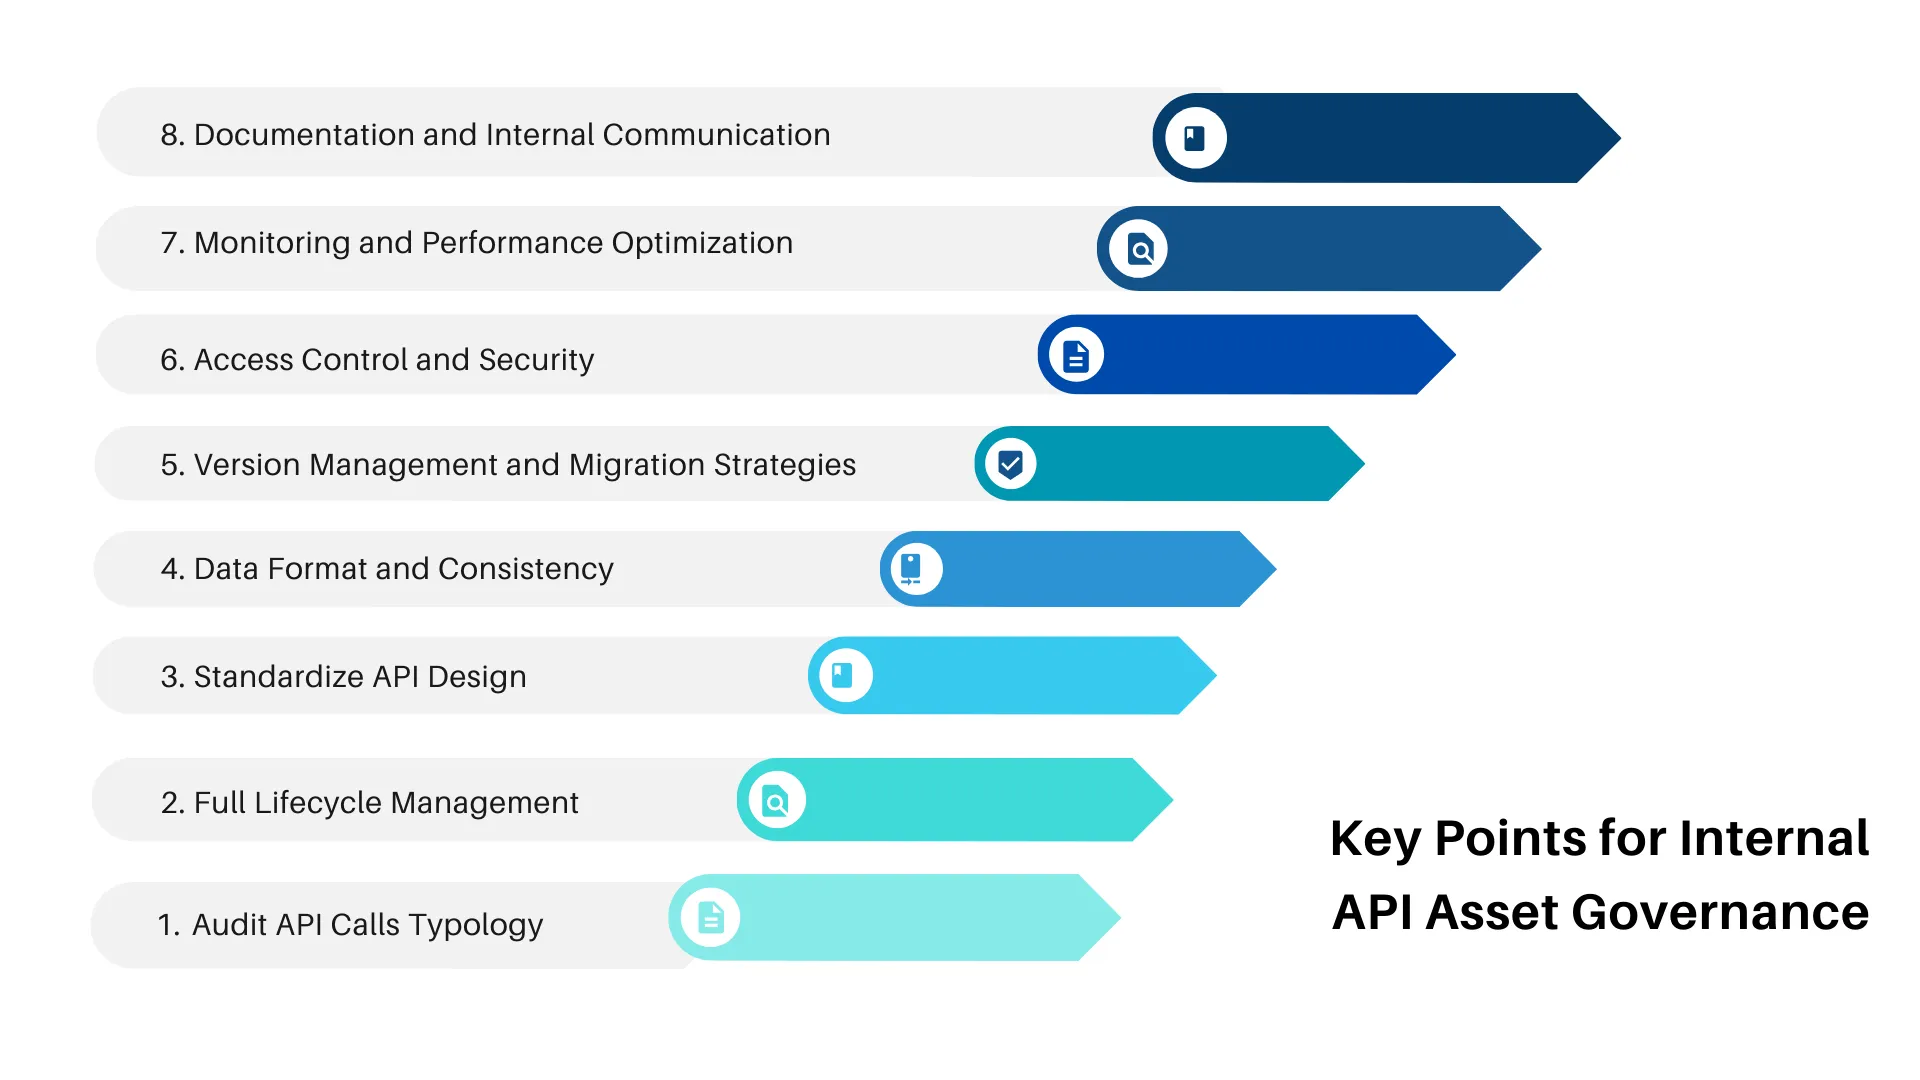 Key Points for Internal API Asset Governance